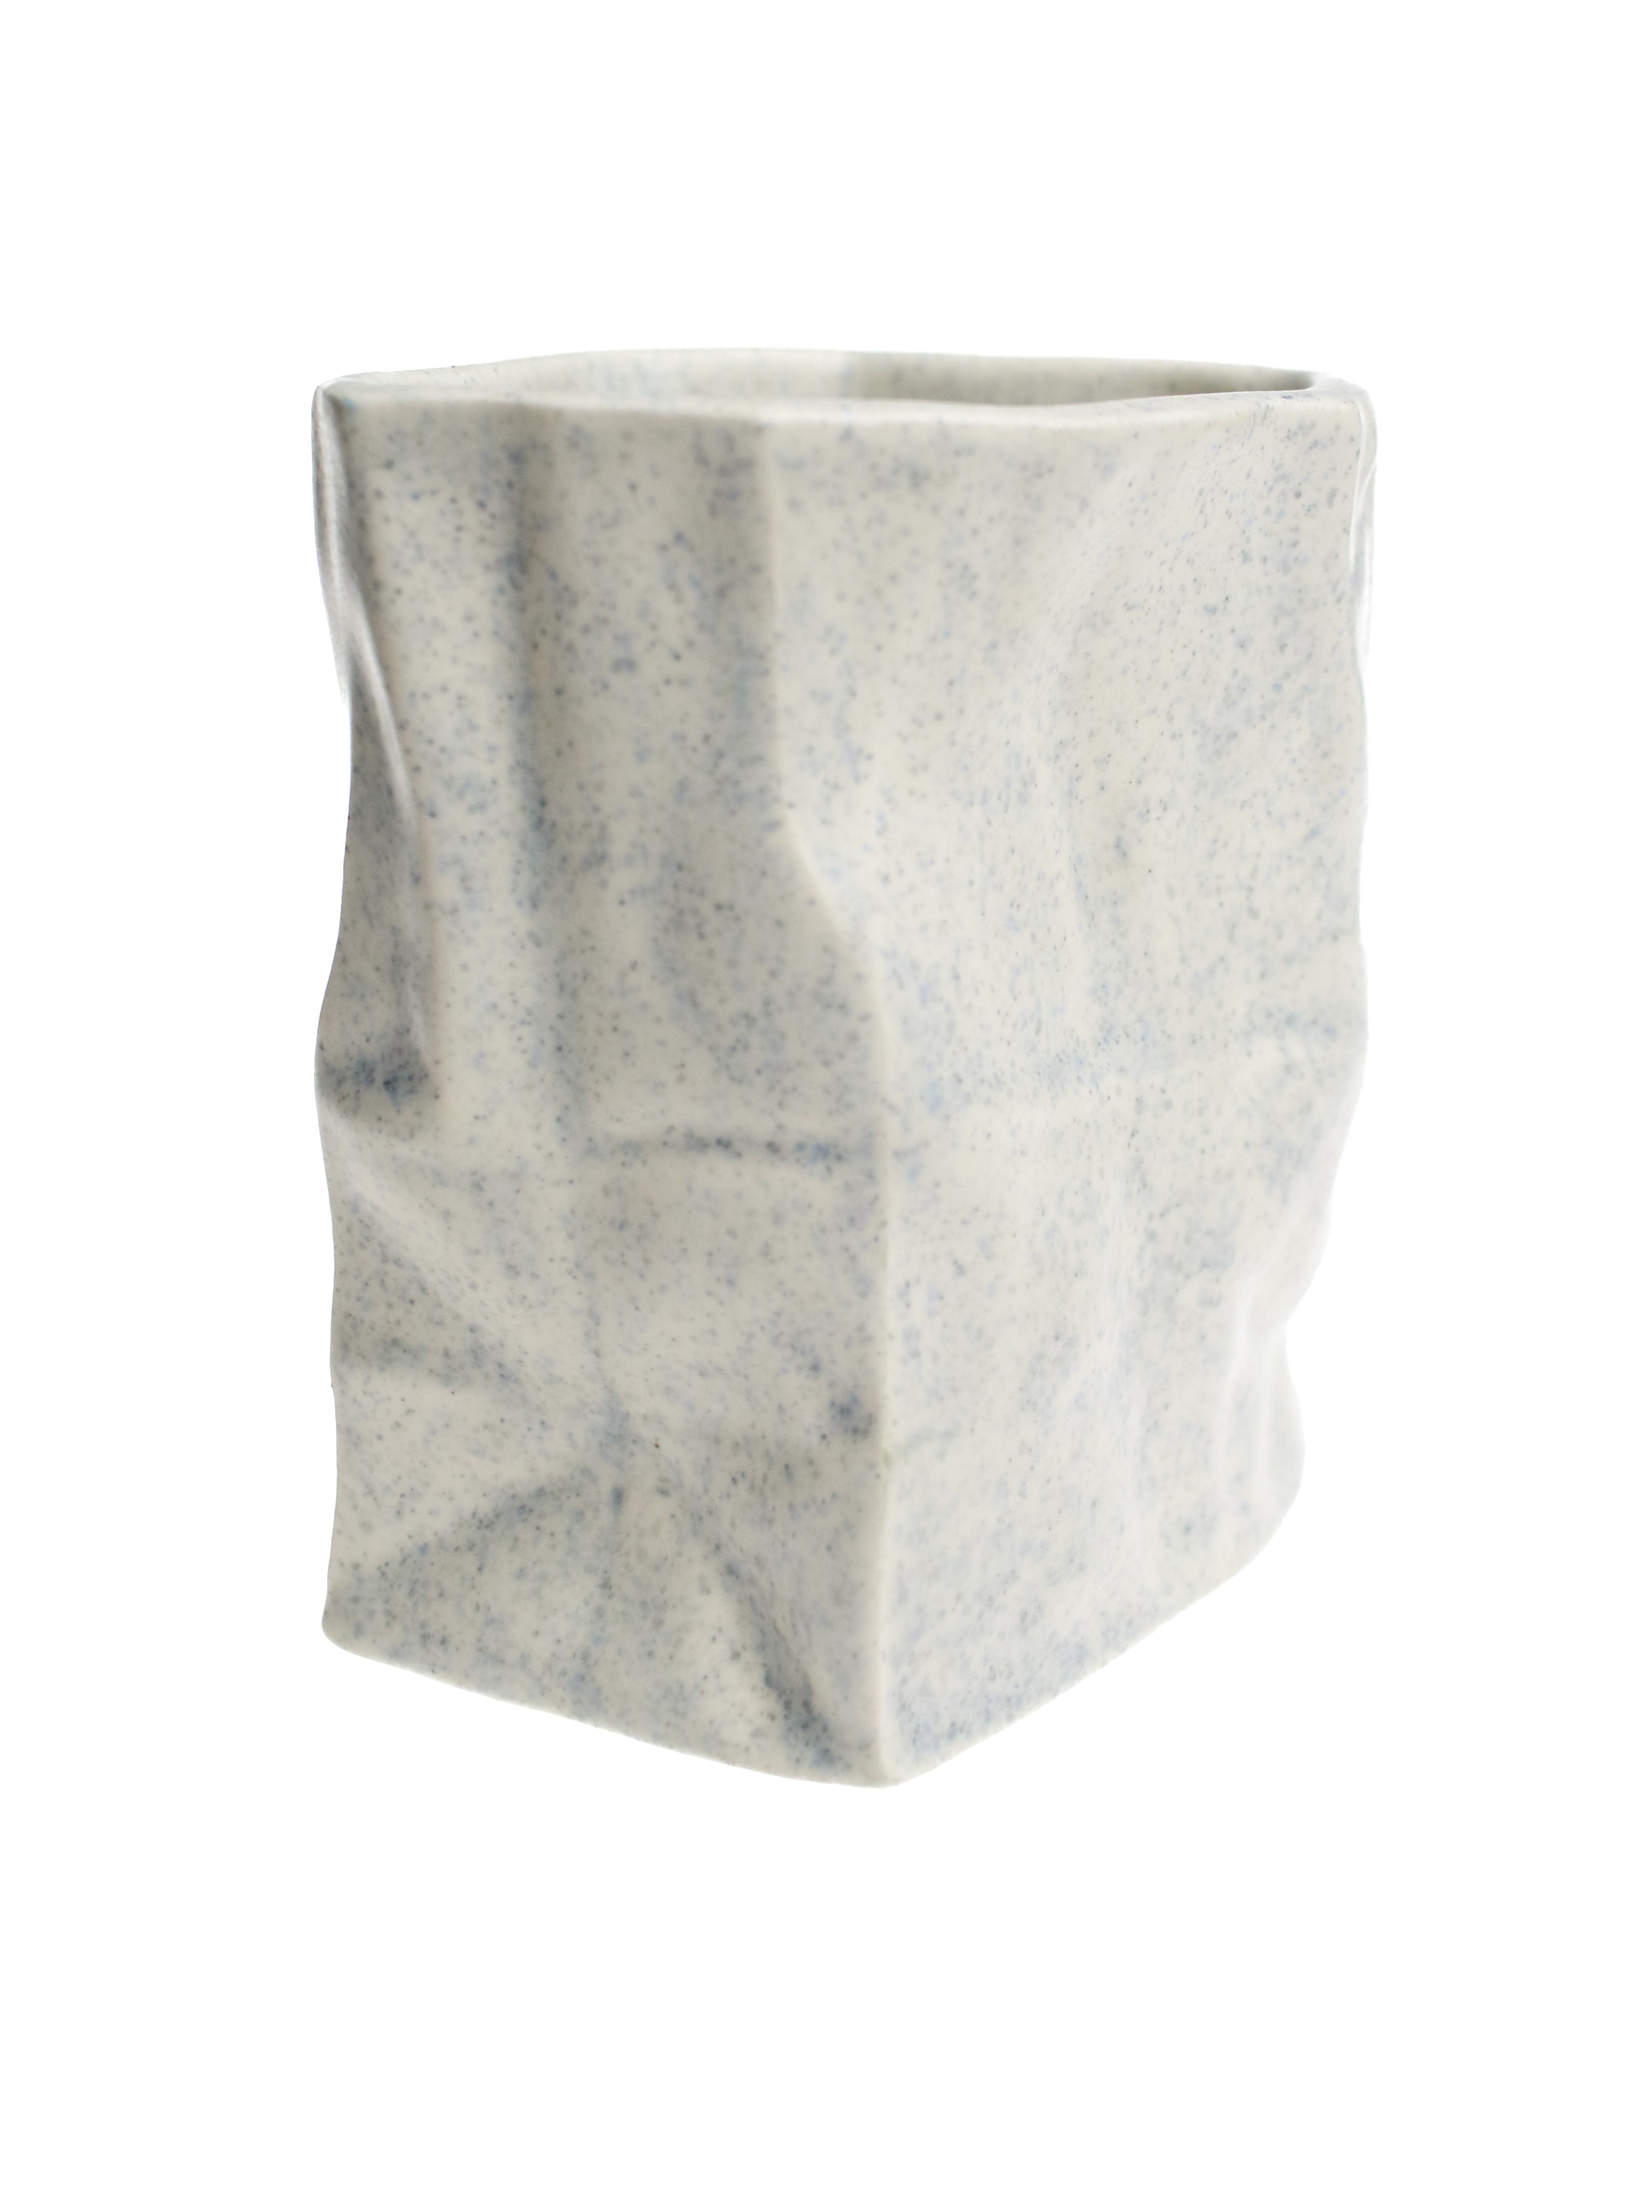 Blue Speckle Ceramic Paper Bag Planter/Vase with Plant